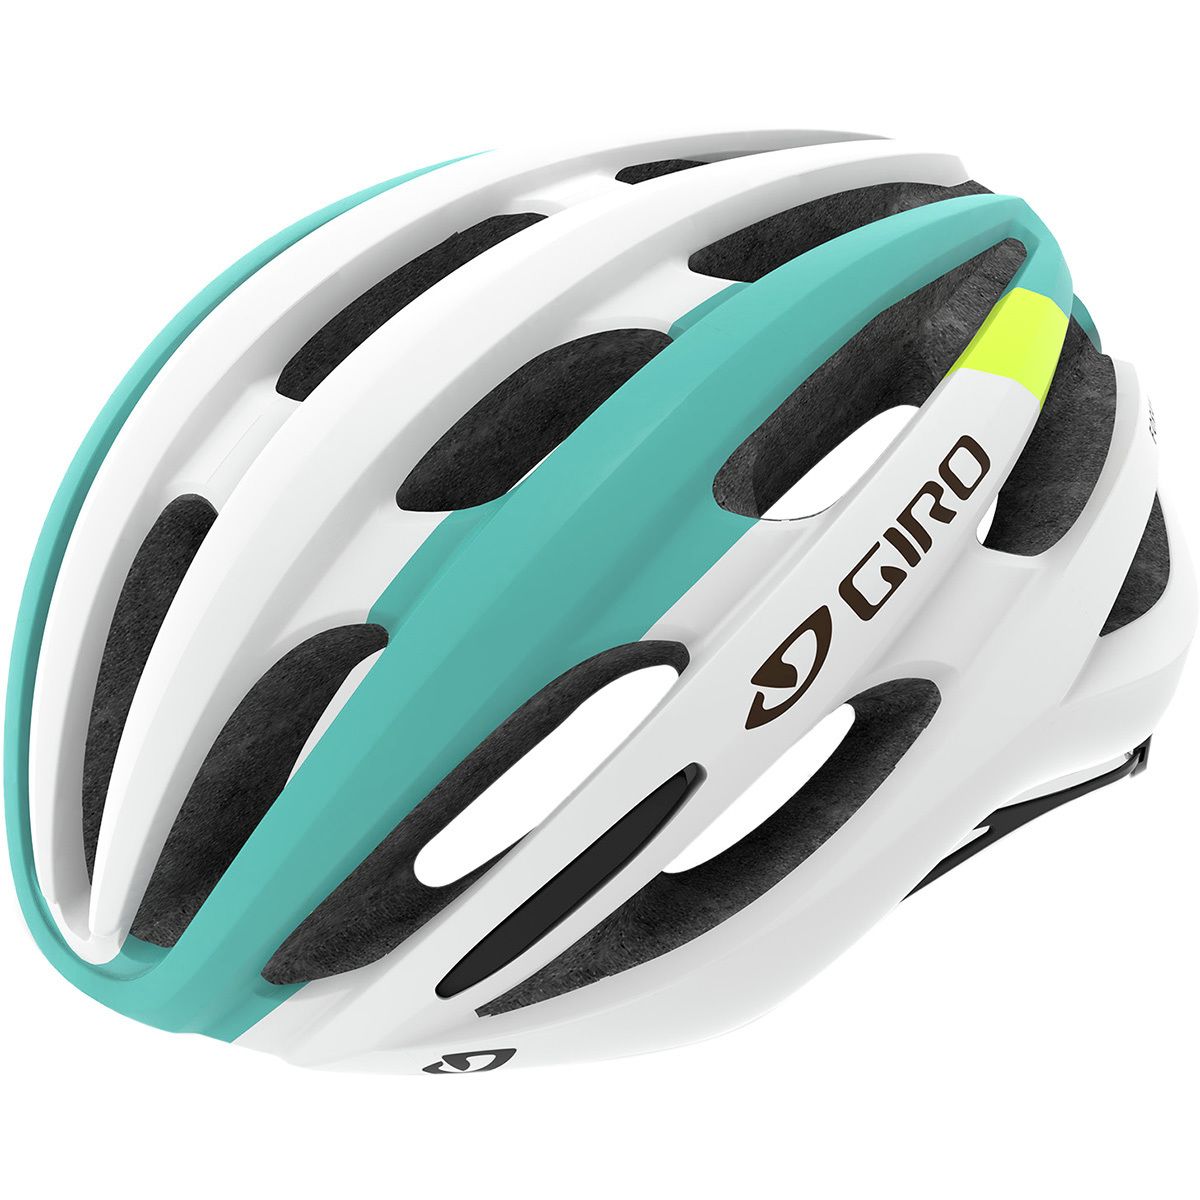 Giro Foray Helmet